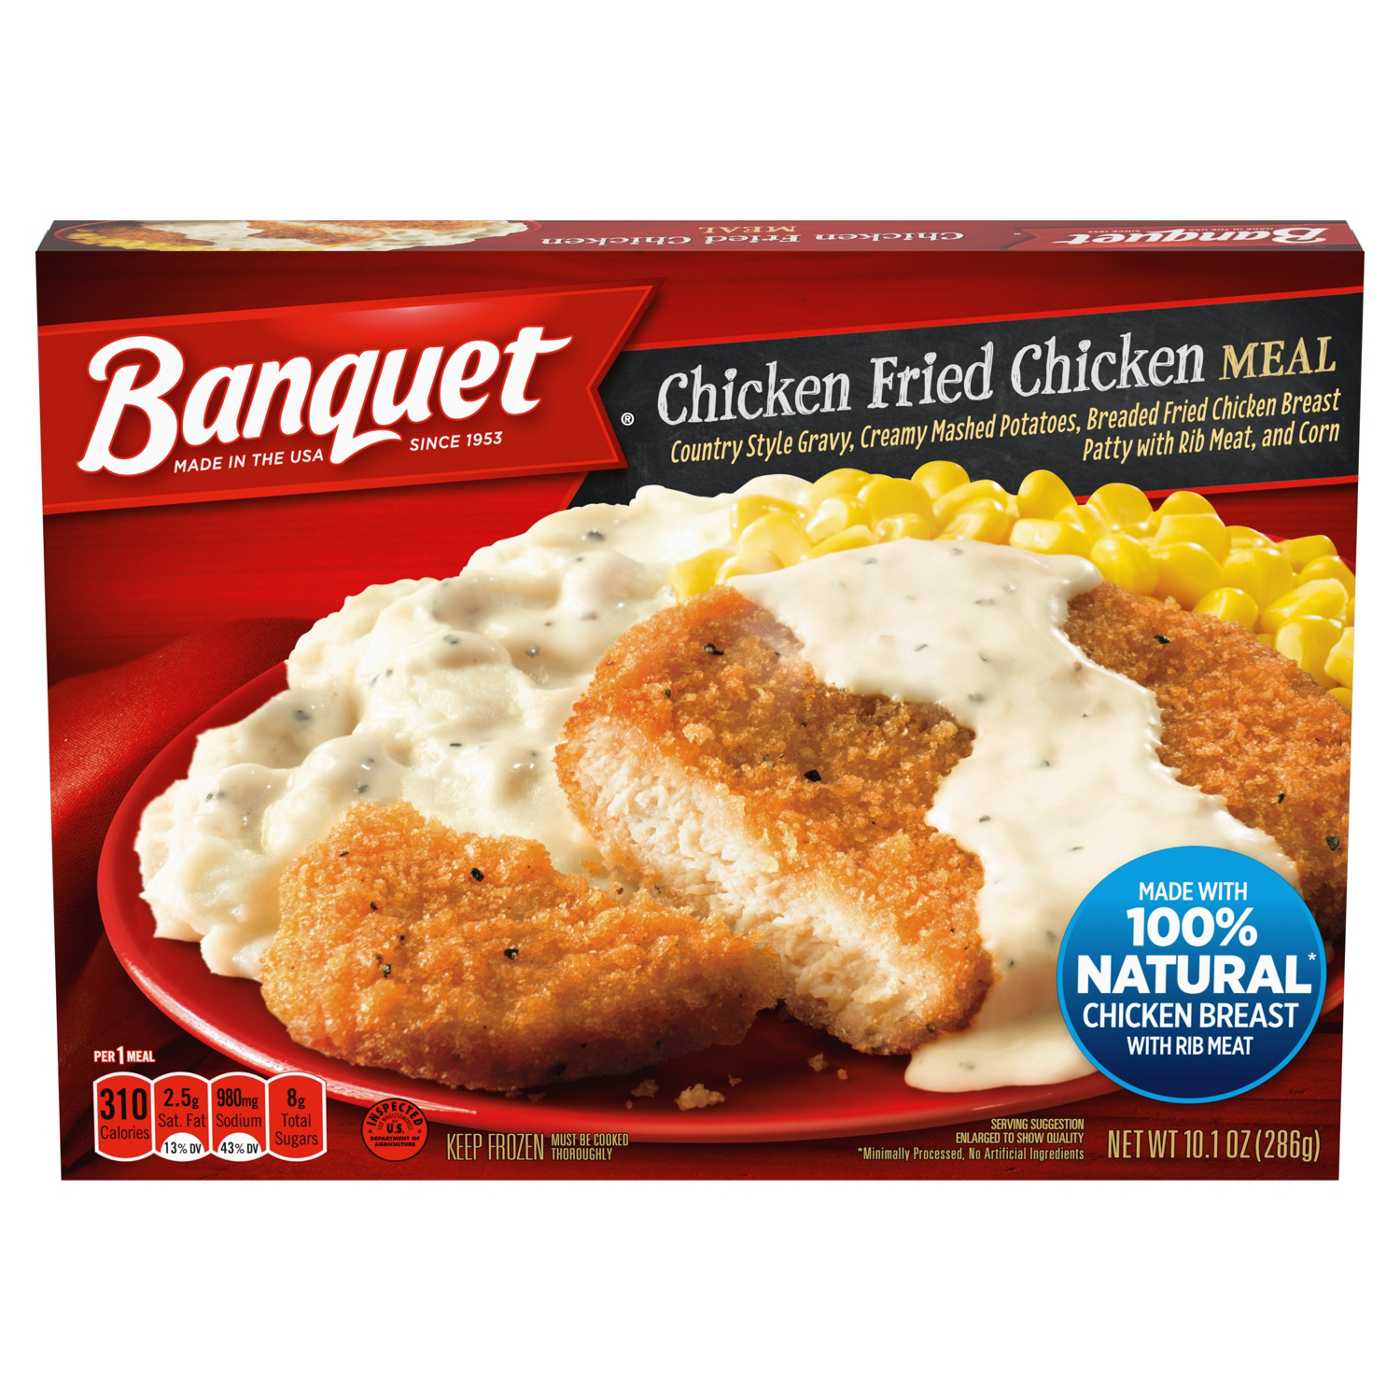 Banquet Chicken Fried Chicken Frozen Meal; image 1 of 3